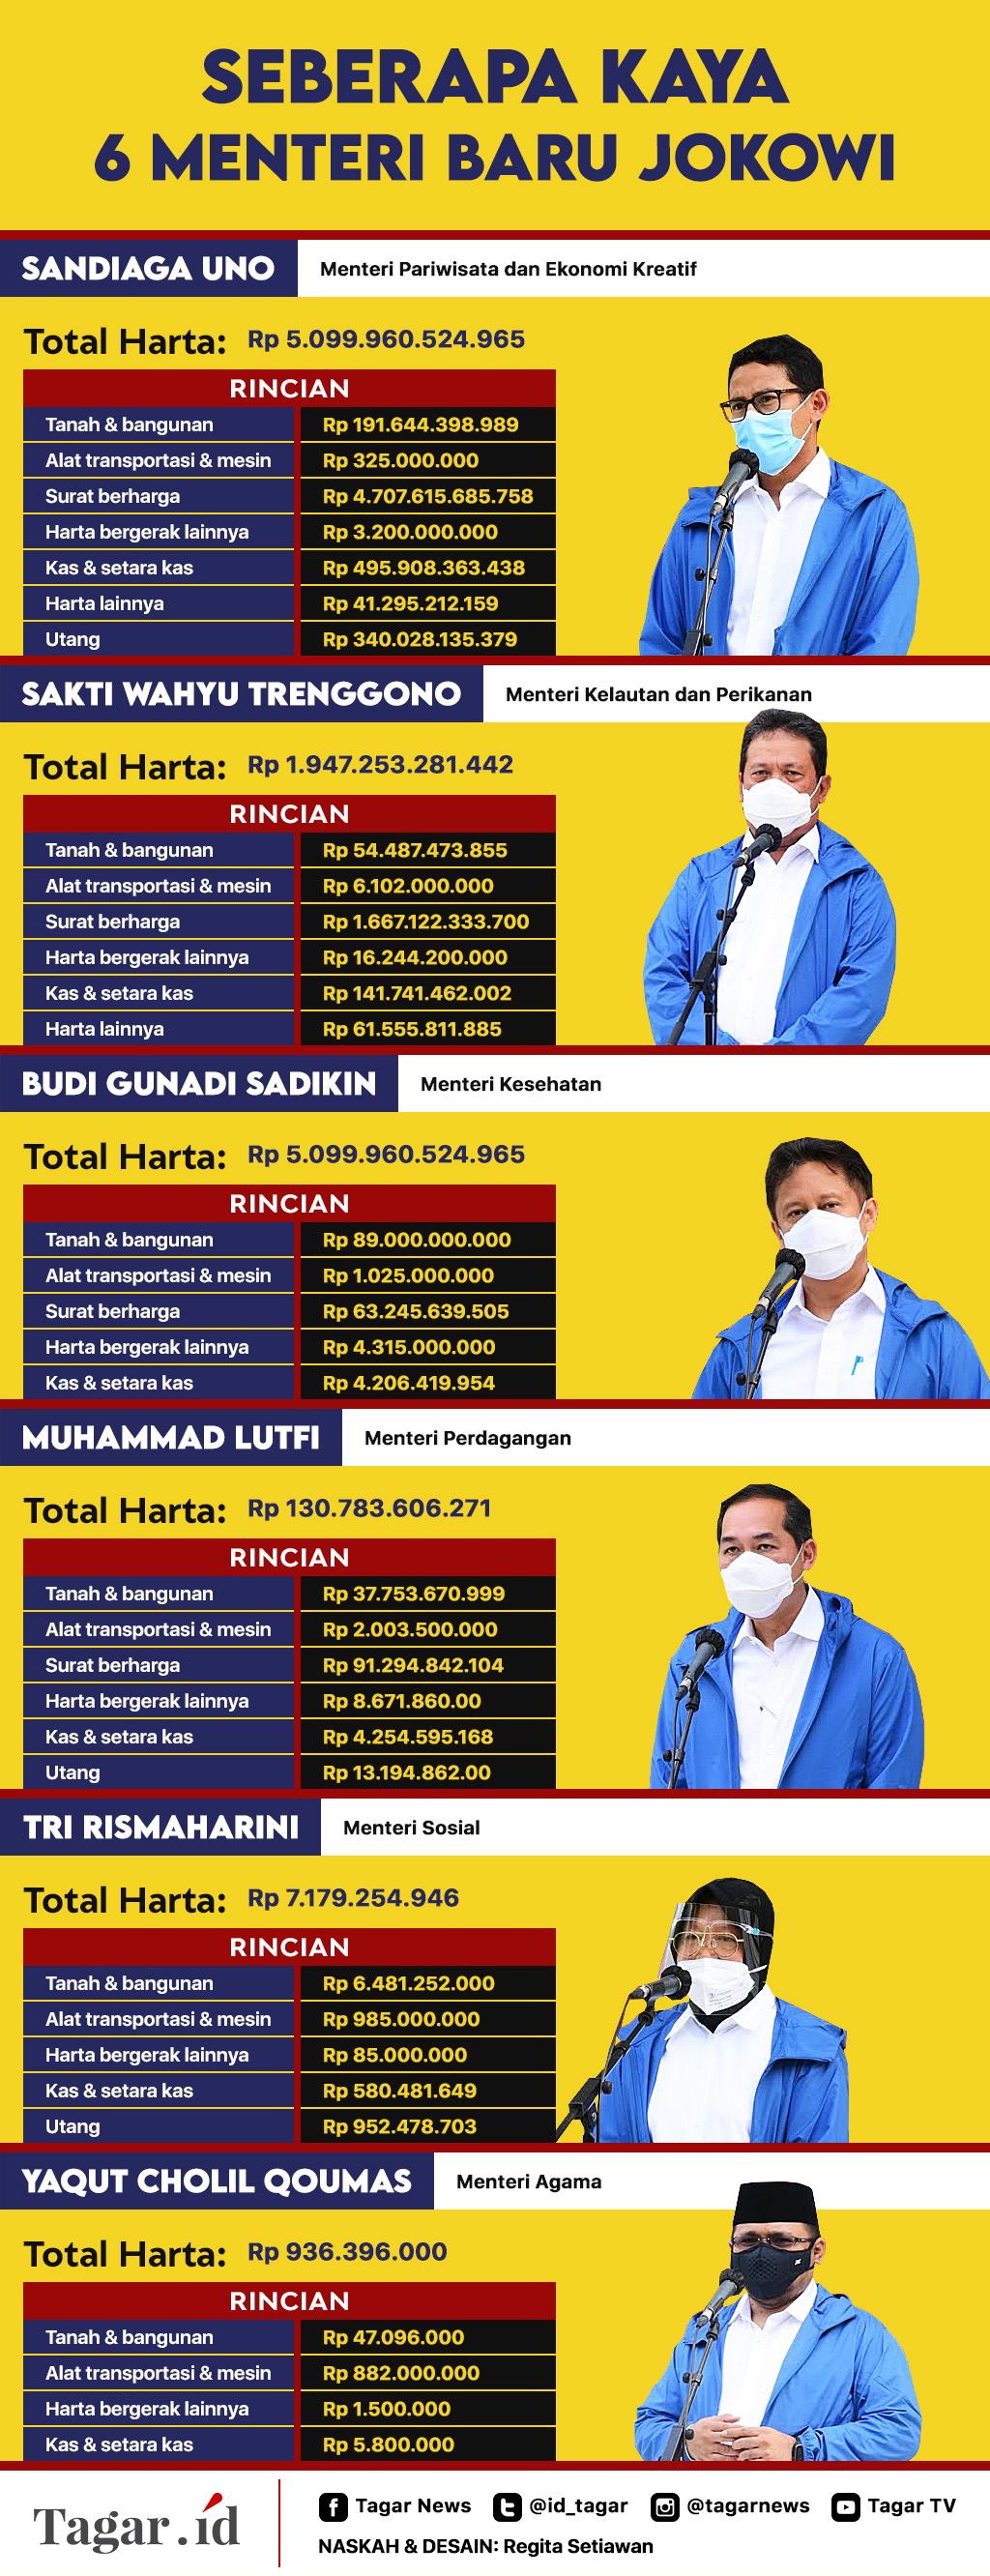 Infografis: Seberapa Kaya 6 Menteri Baru Jokowi